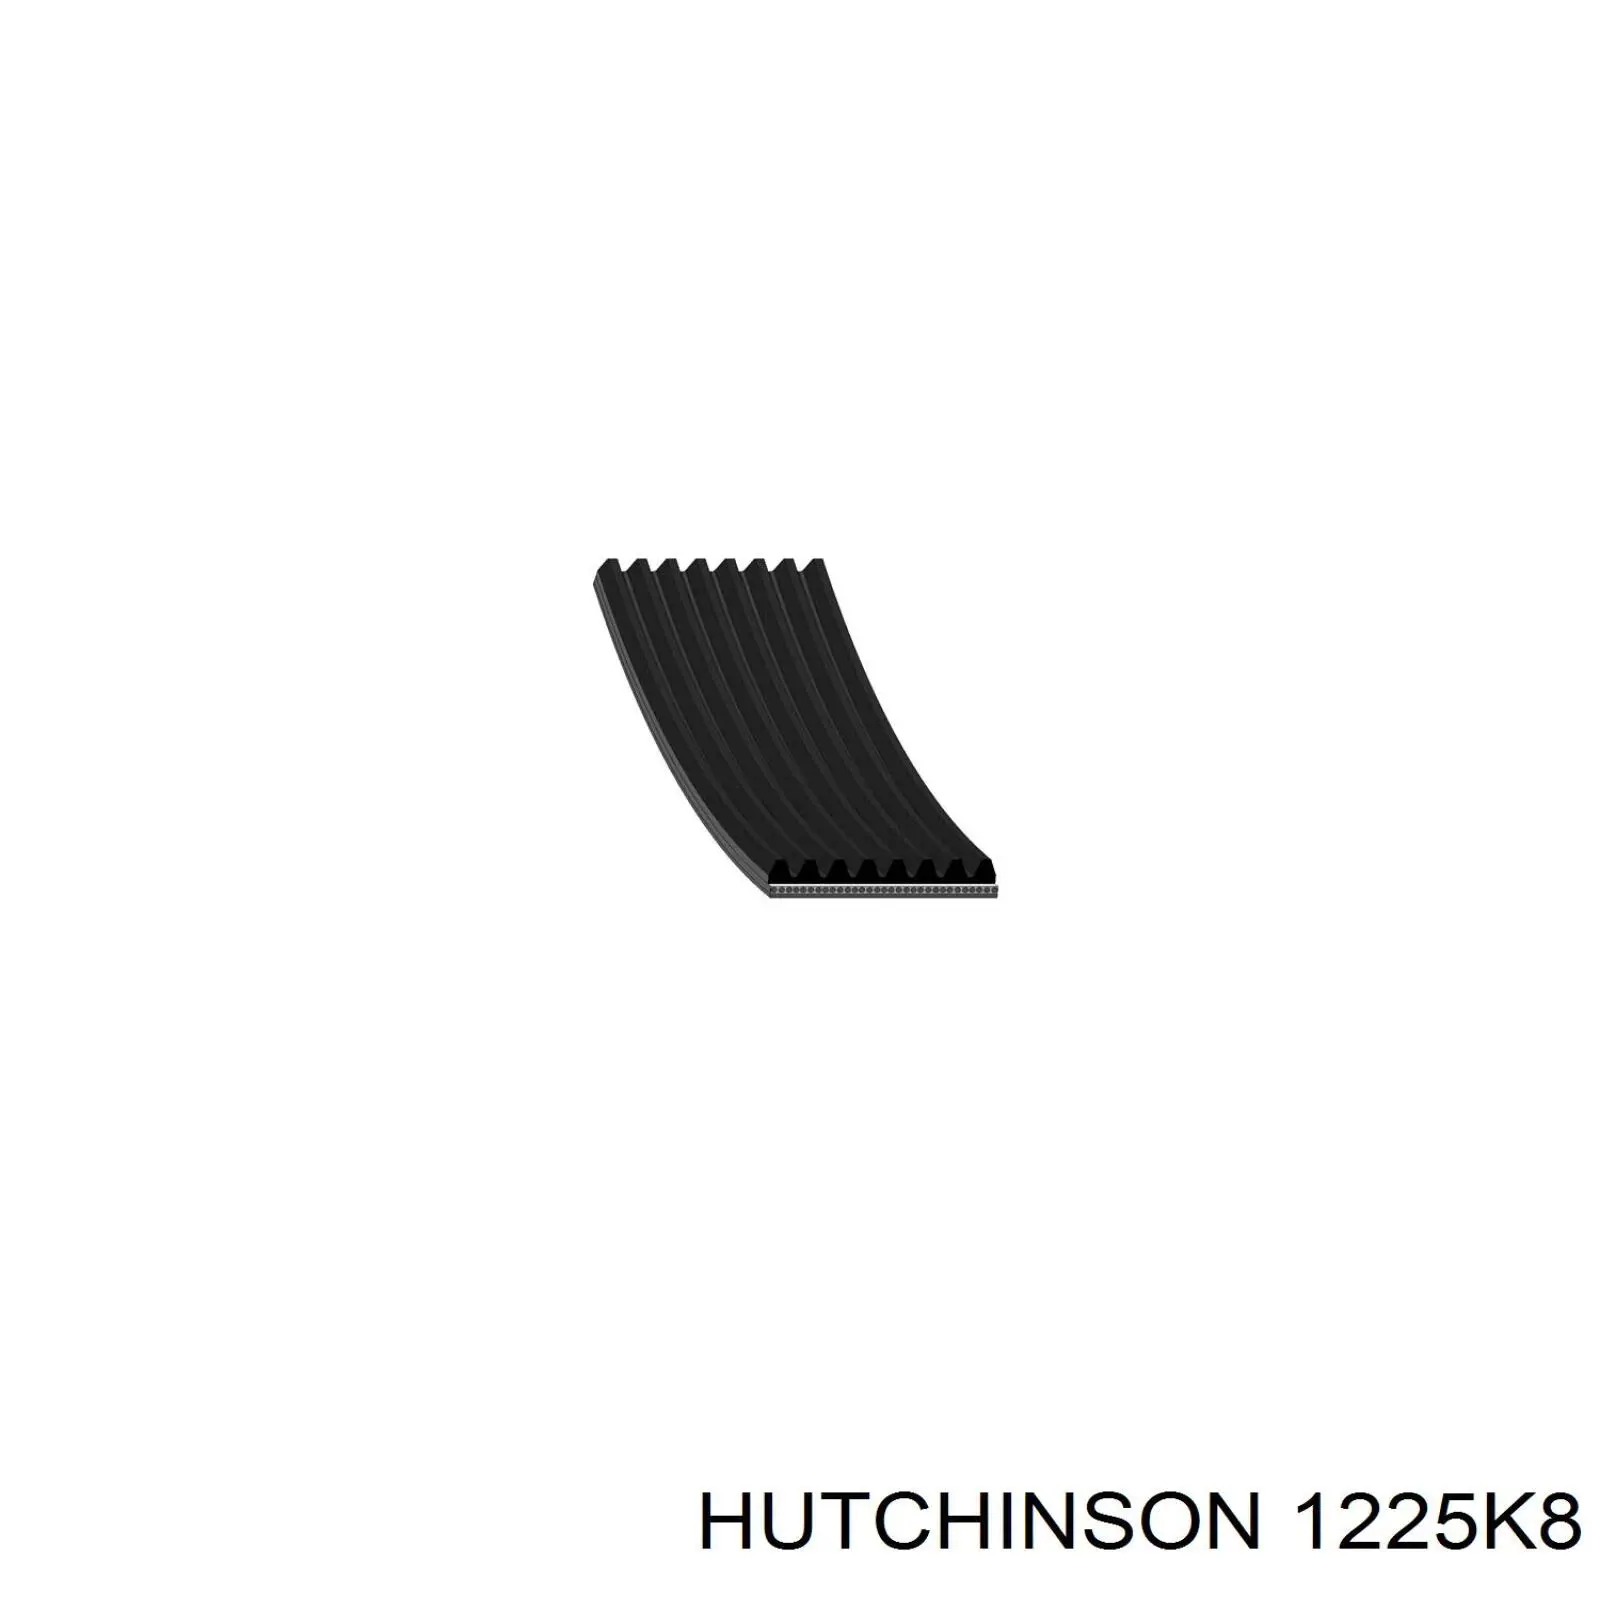 1225K8 Hutchinson correa trapezoidal